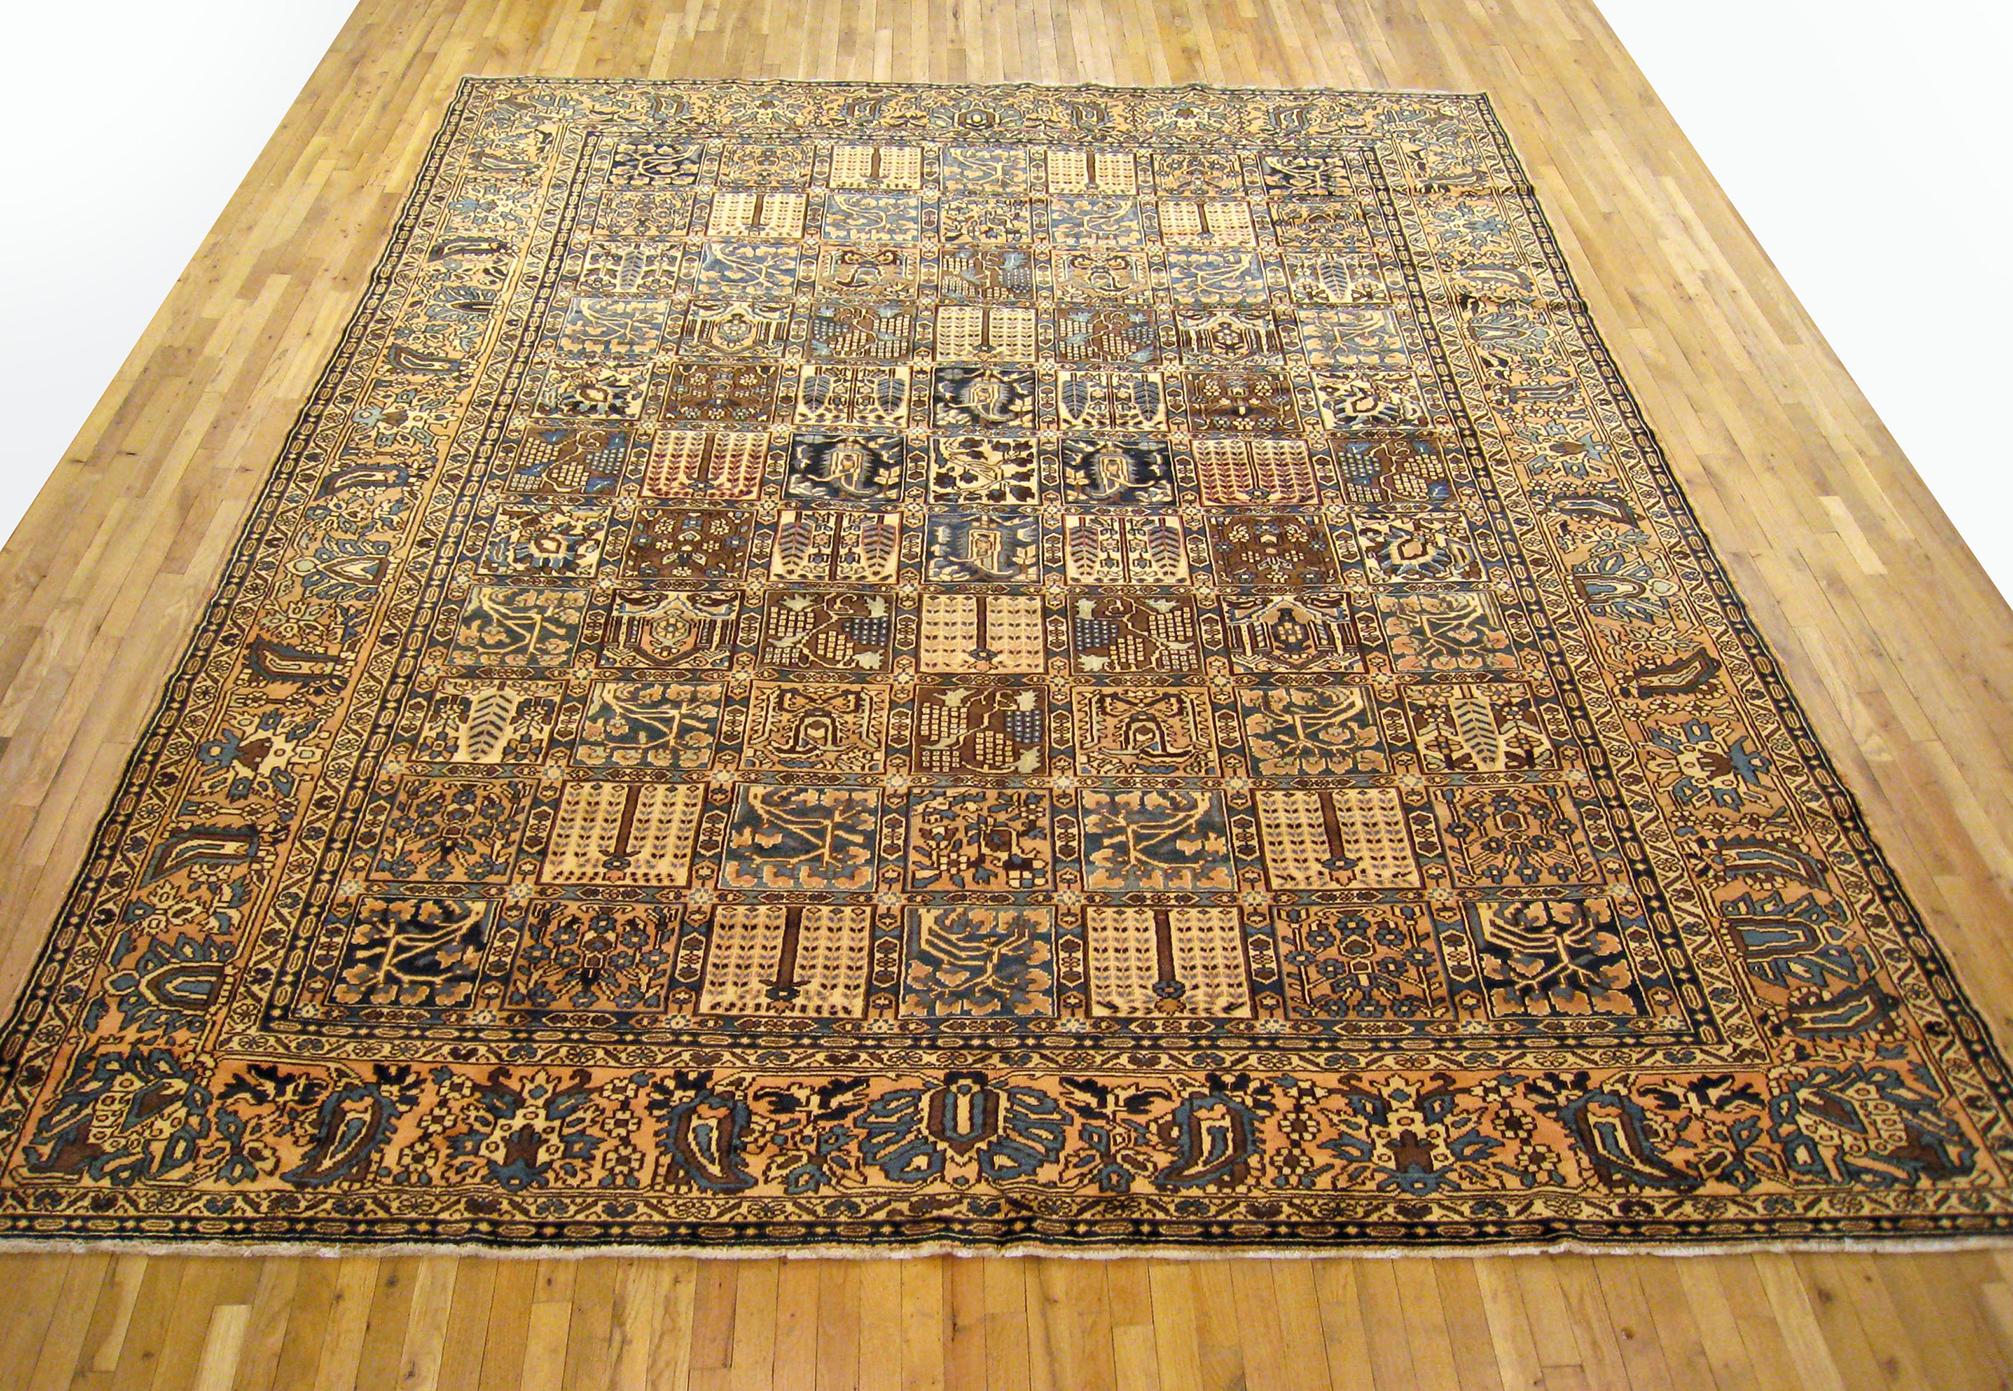 Vintage Persian Baktiari Oriental Rug, Room size

A vintage Baktiari oriental rug, size 13'0